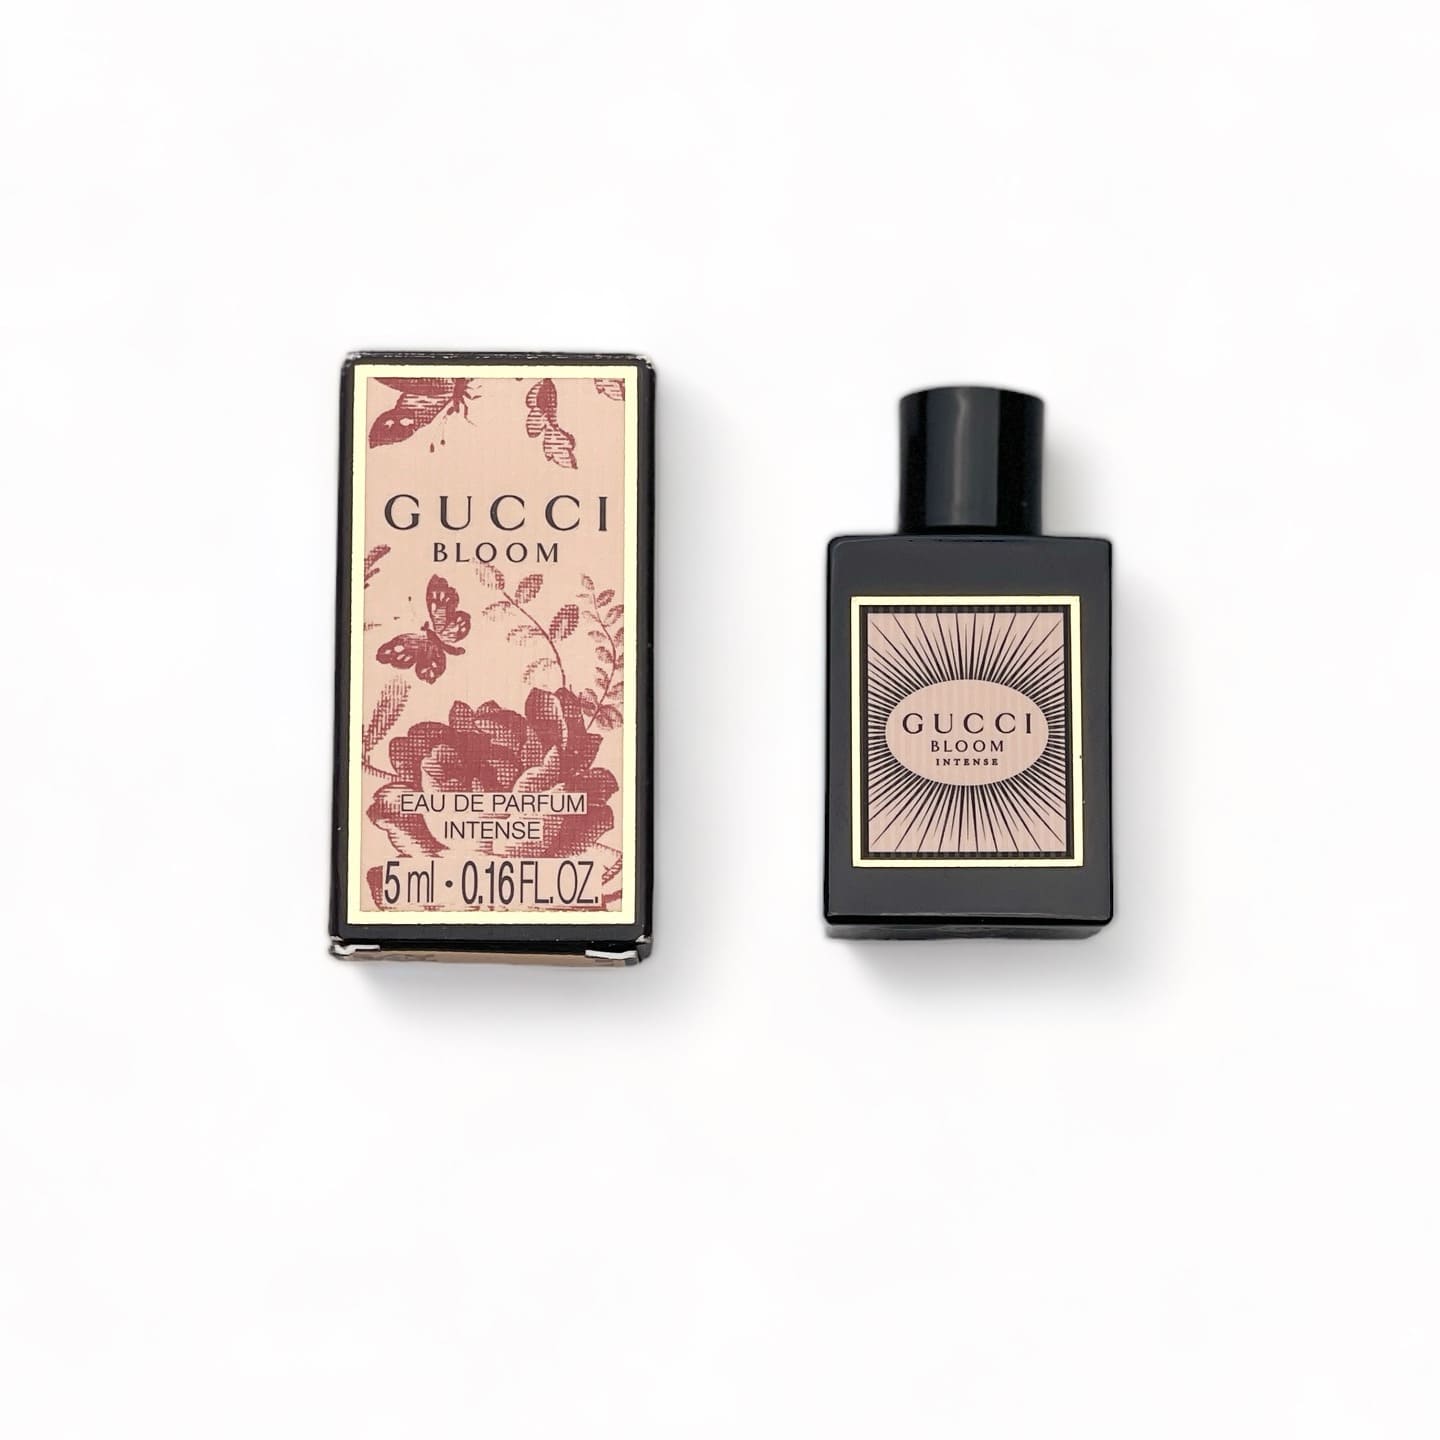 Gucci Bloom EDP Intense / Travel Size (5ml)